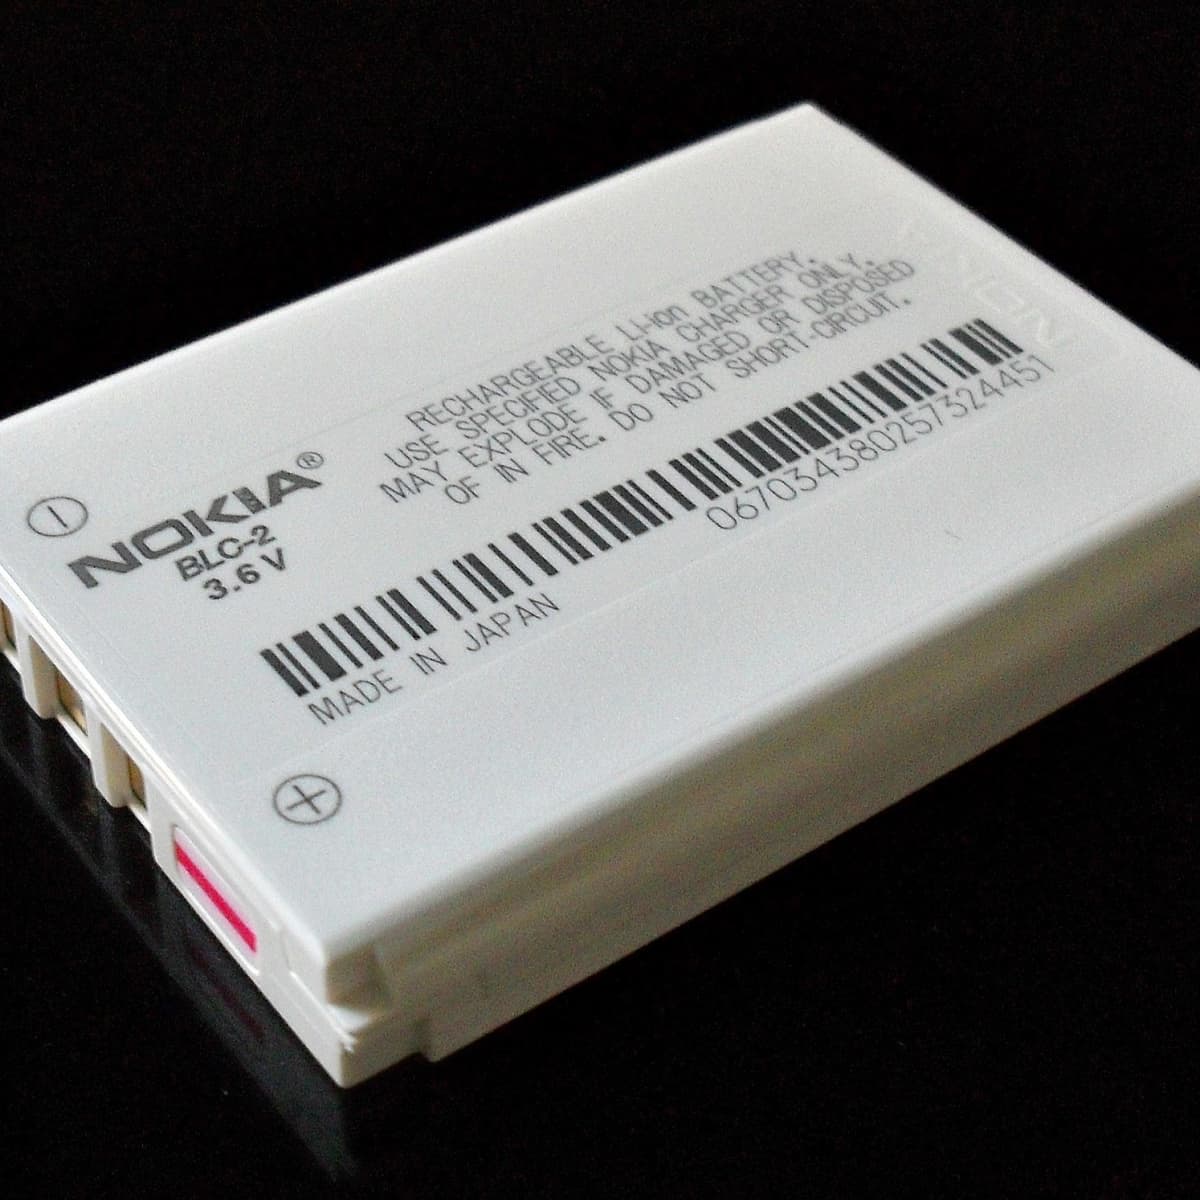 Rechargeable Batteries Guide, NiMH, Li-ion